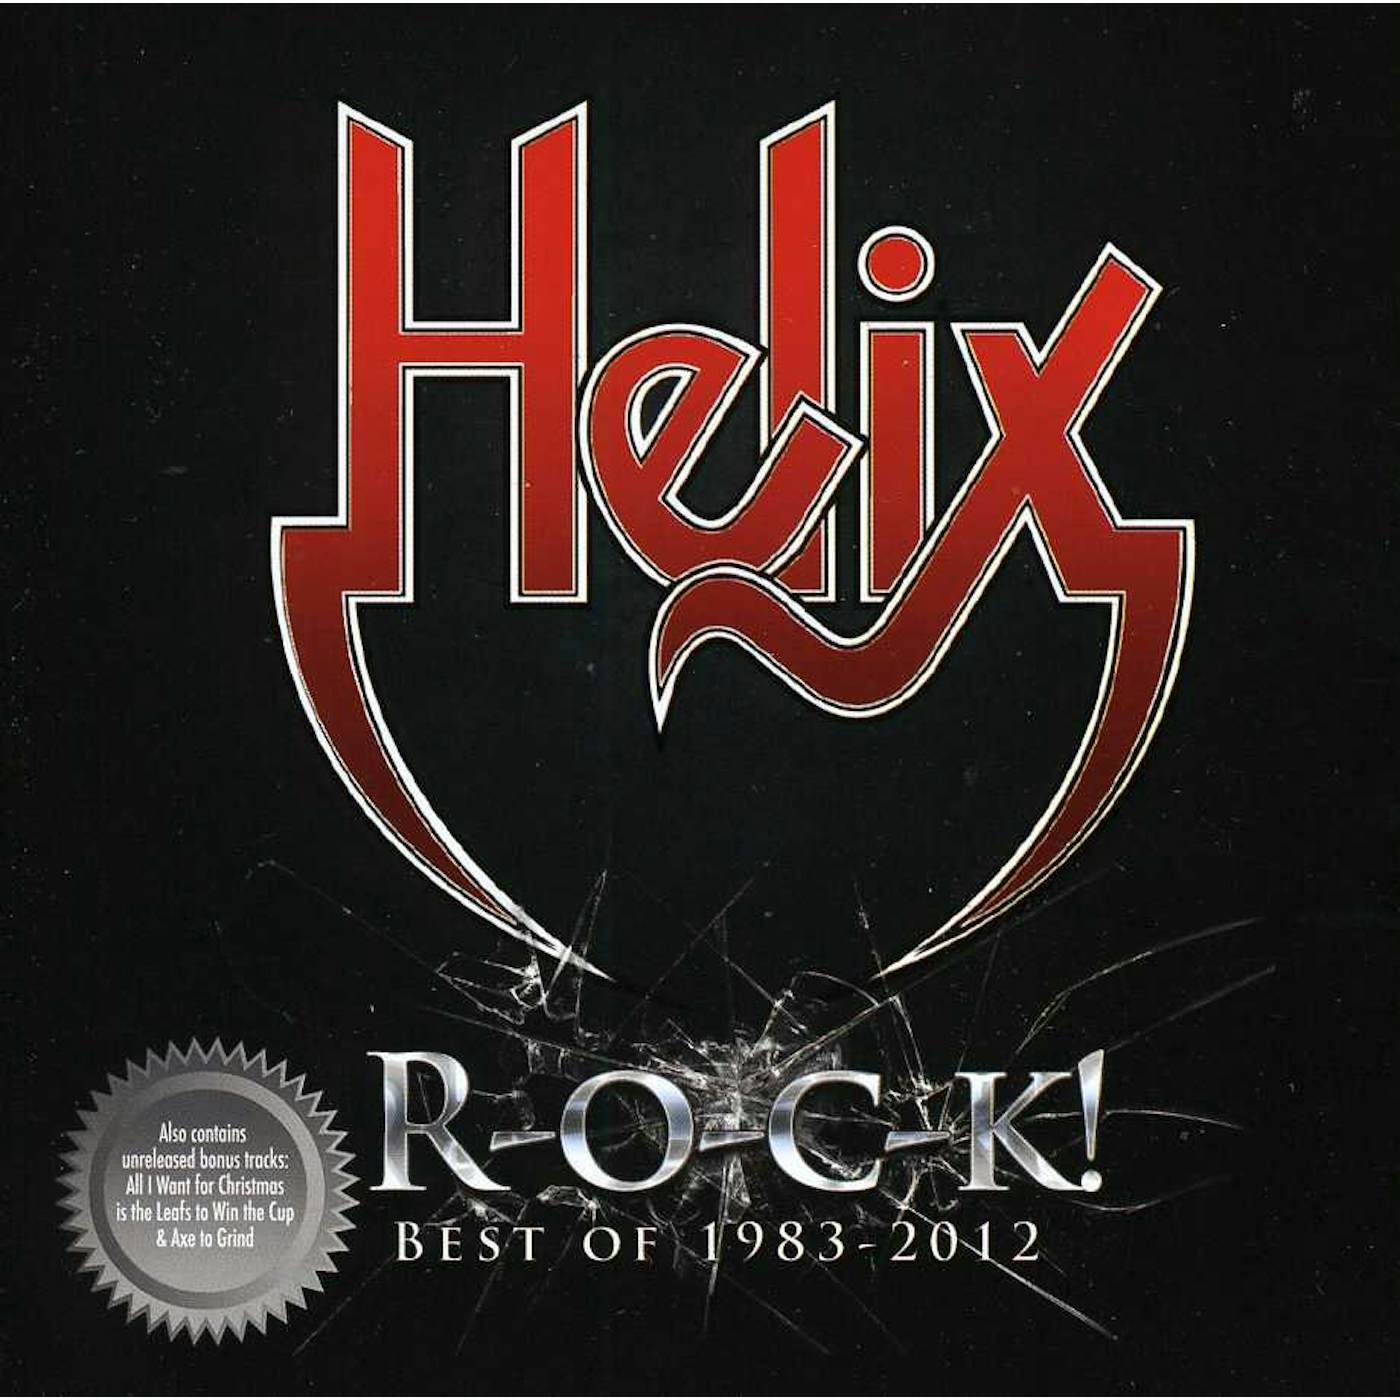 Helix R-O-C-K BEST OF 1983-2012 CD